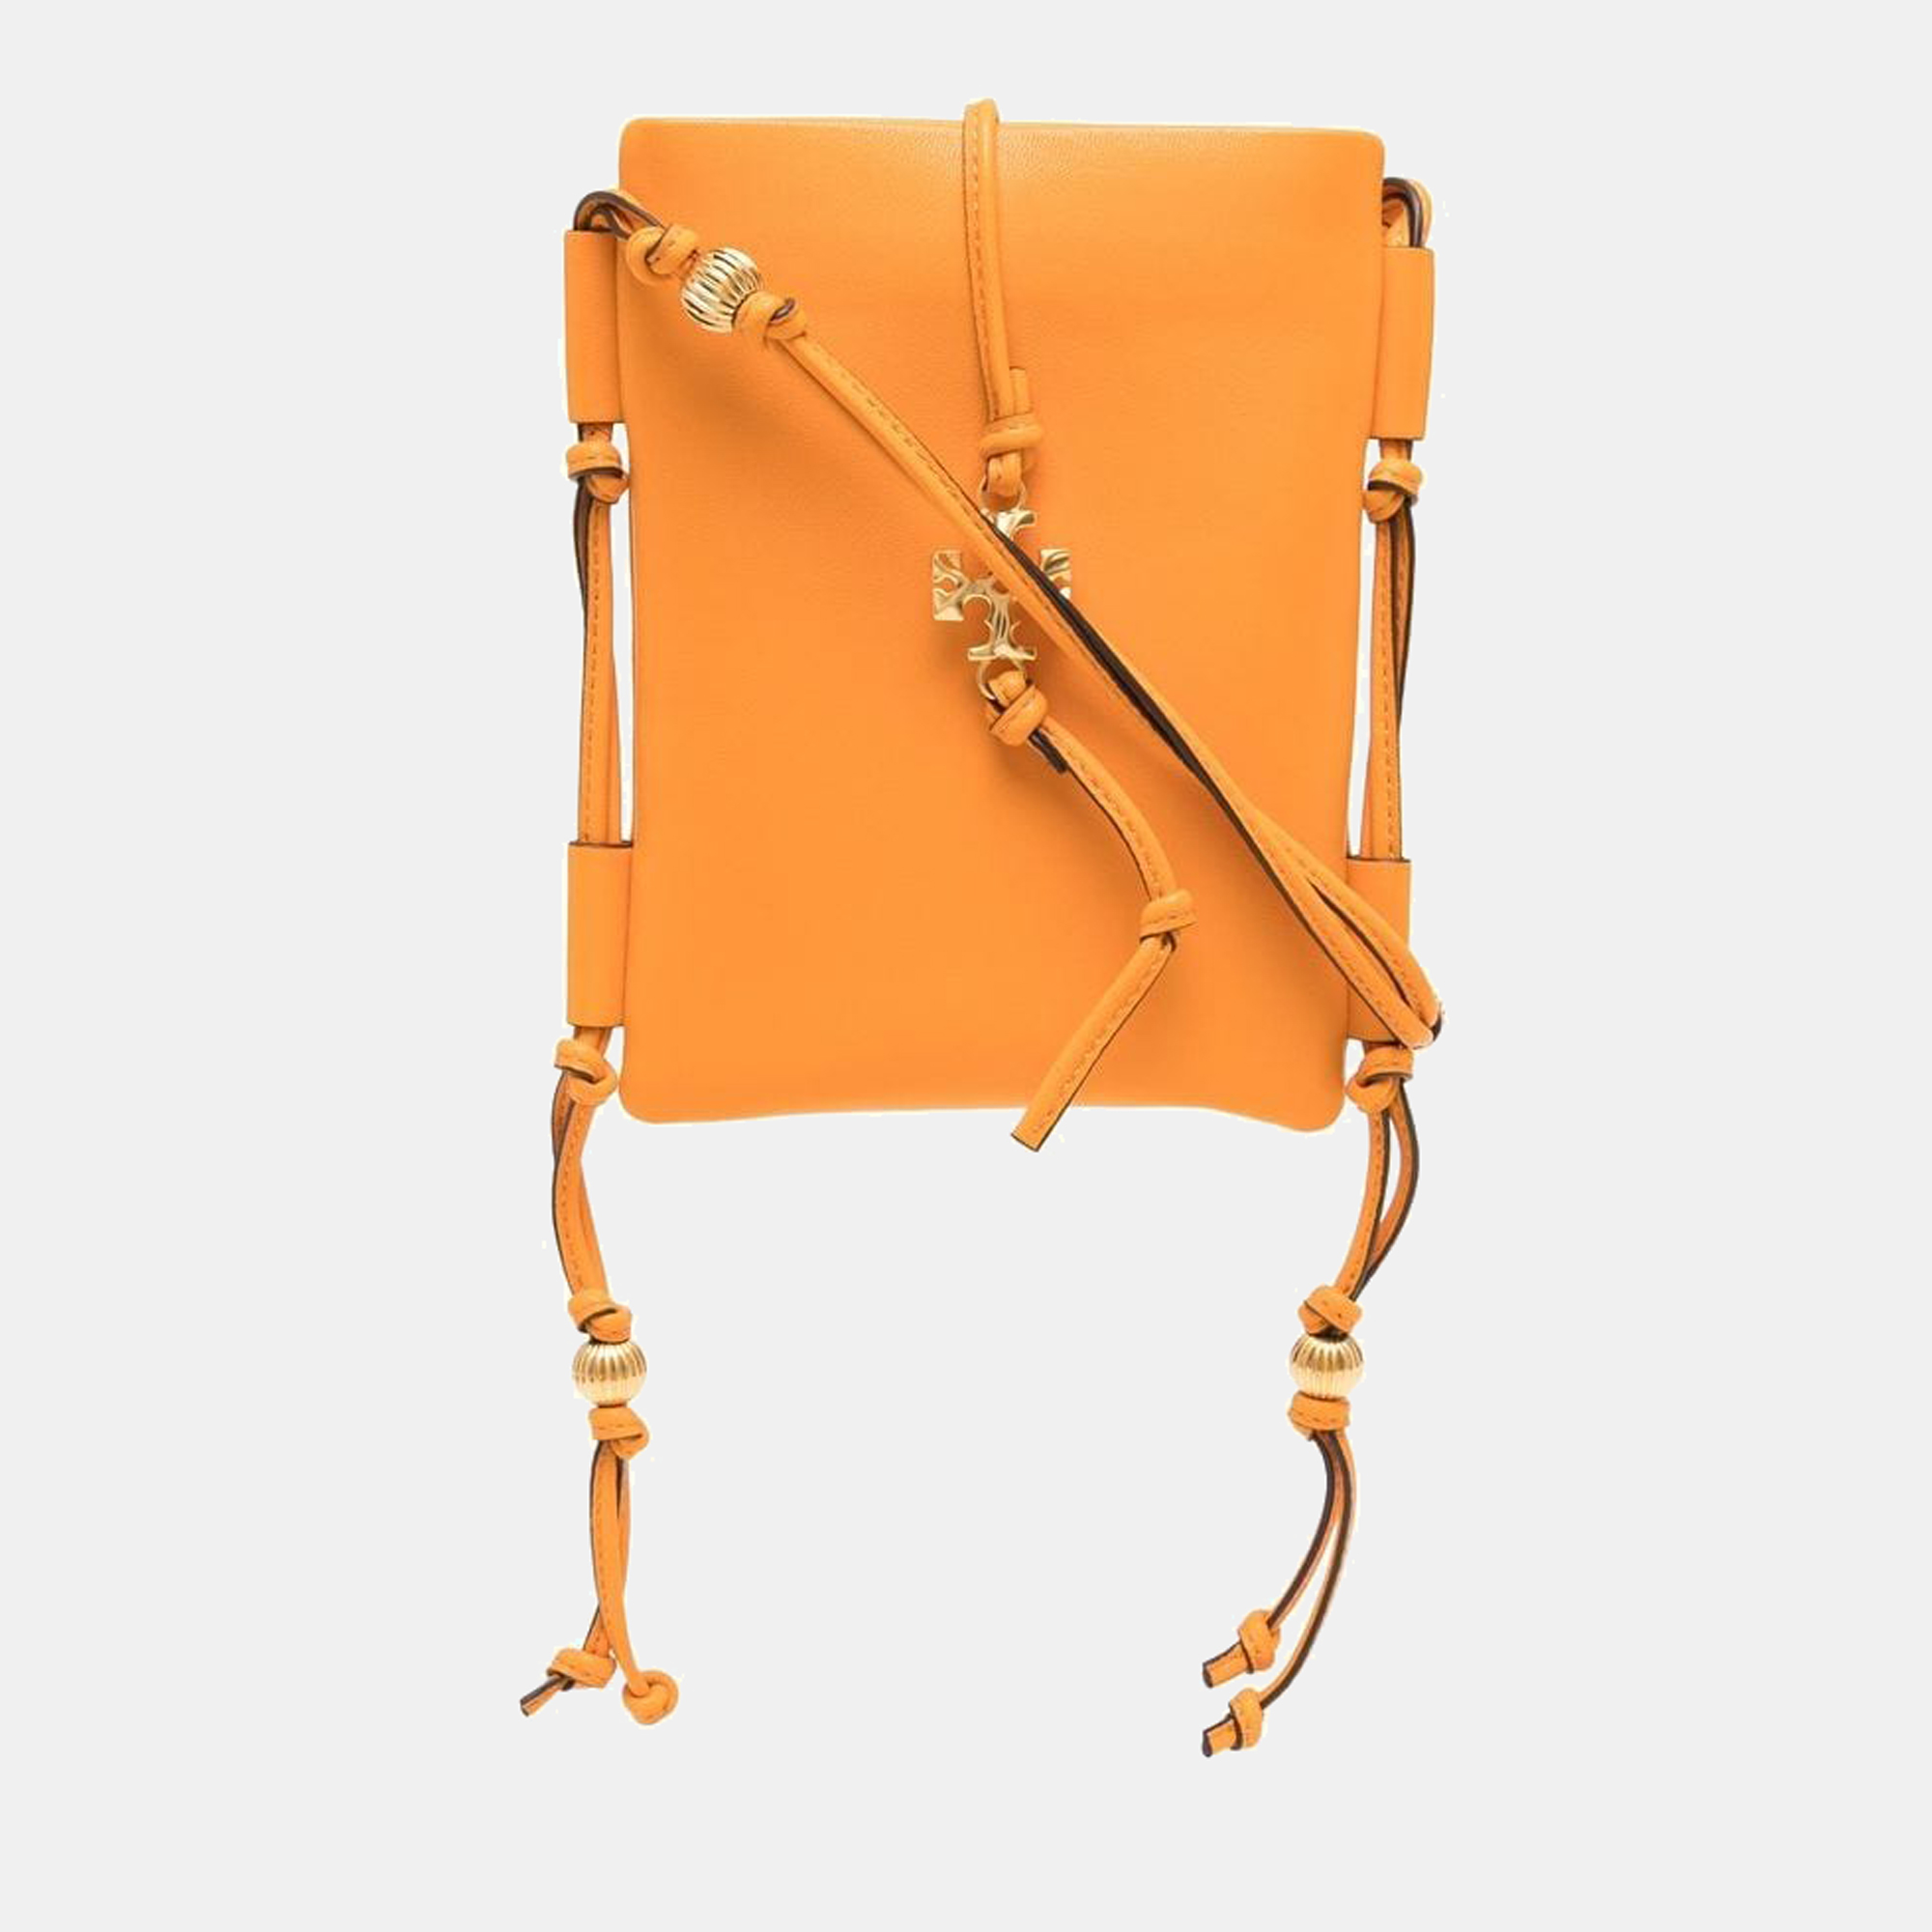 Tory Burch Orange - Leather - Phone Case Bag